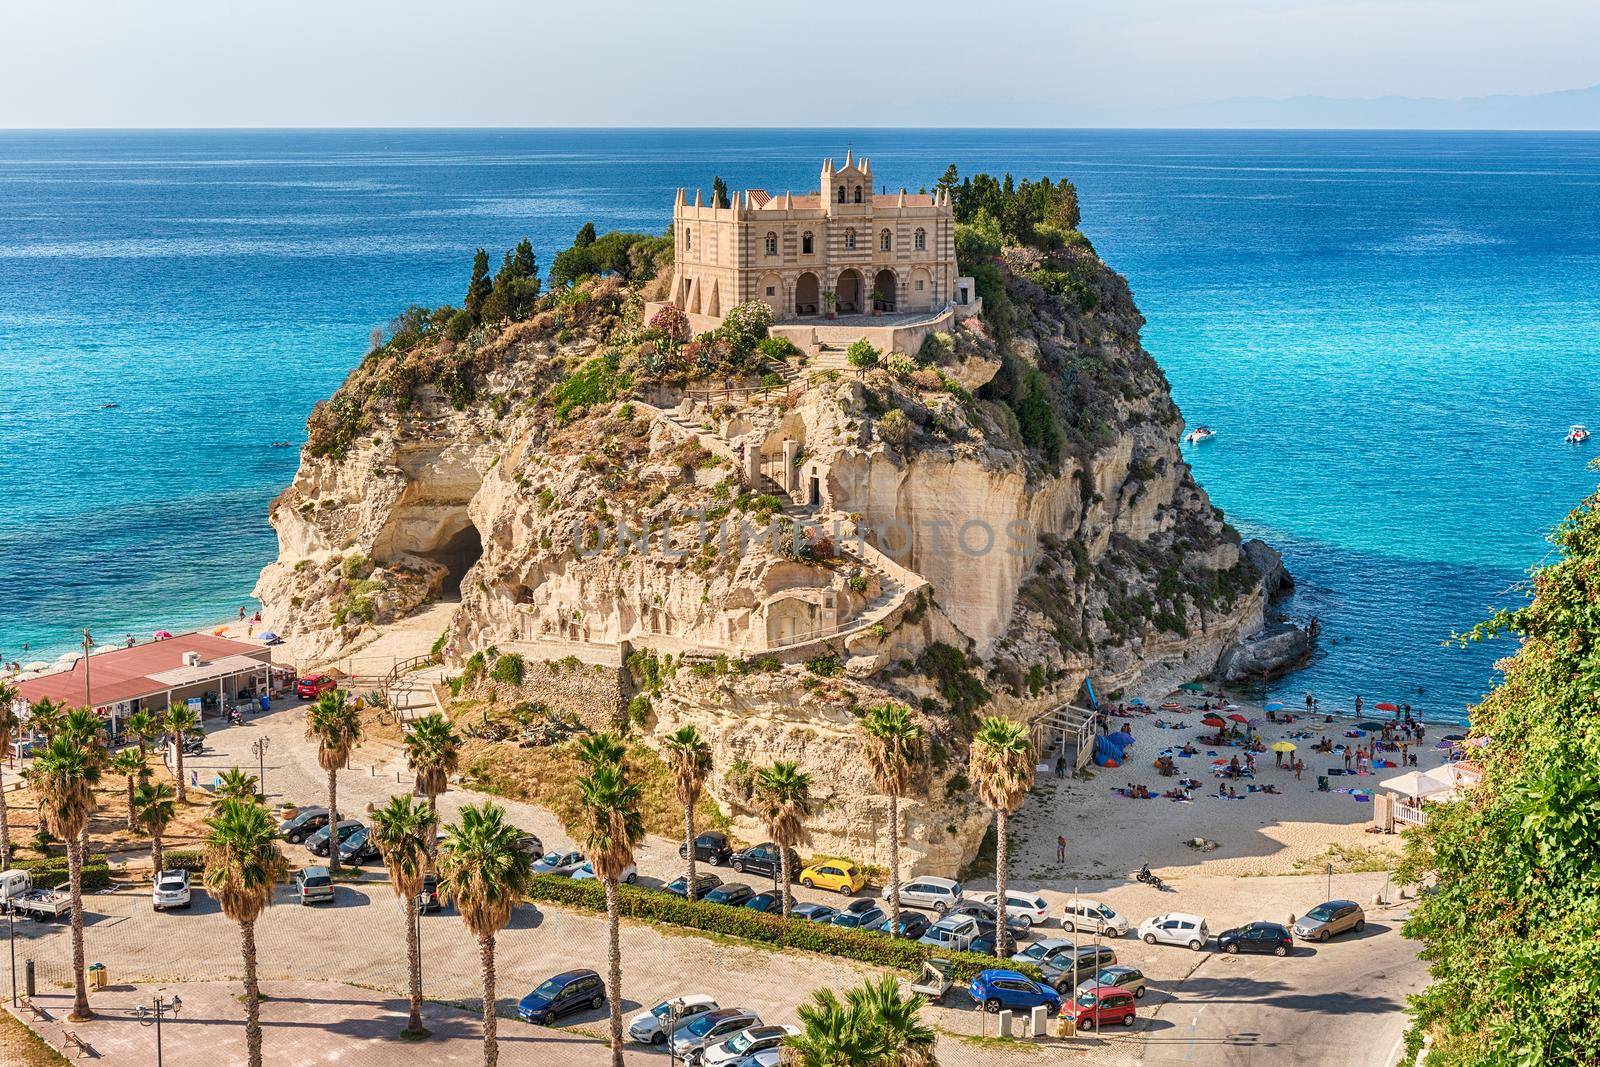 Church of Santa Maria dell'Isola in Tropea, a seaside resort located on the Gulf of Saint Euphemia, part of the Tyrrhenian Sea, Calabria, Italy